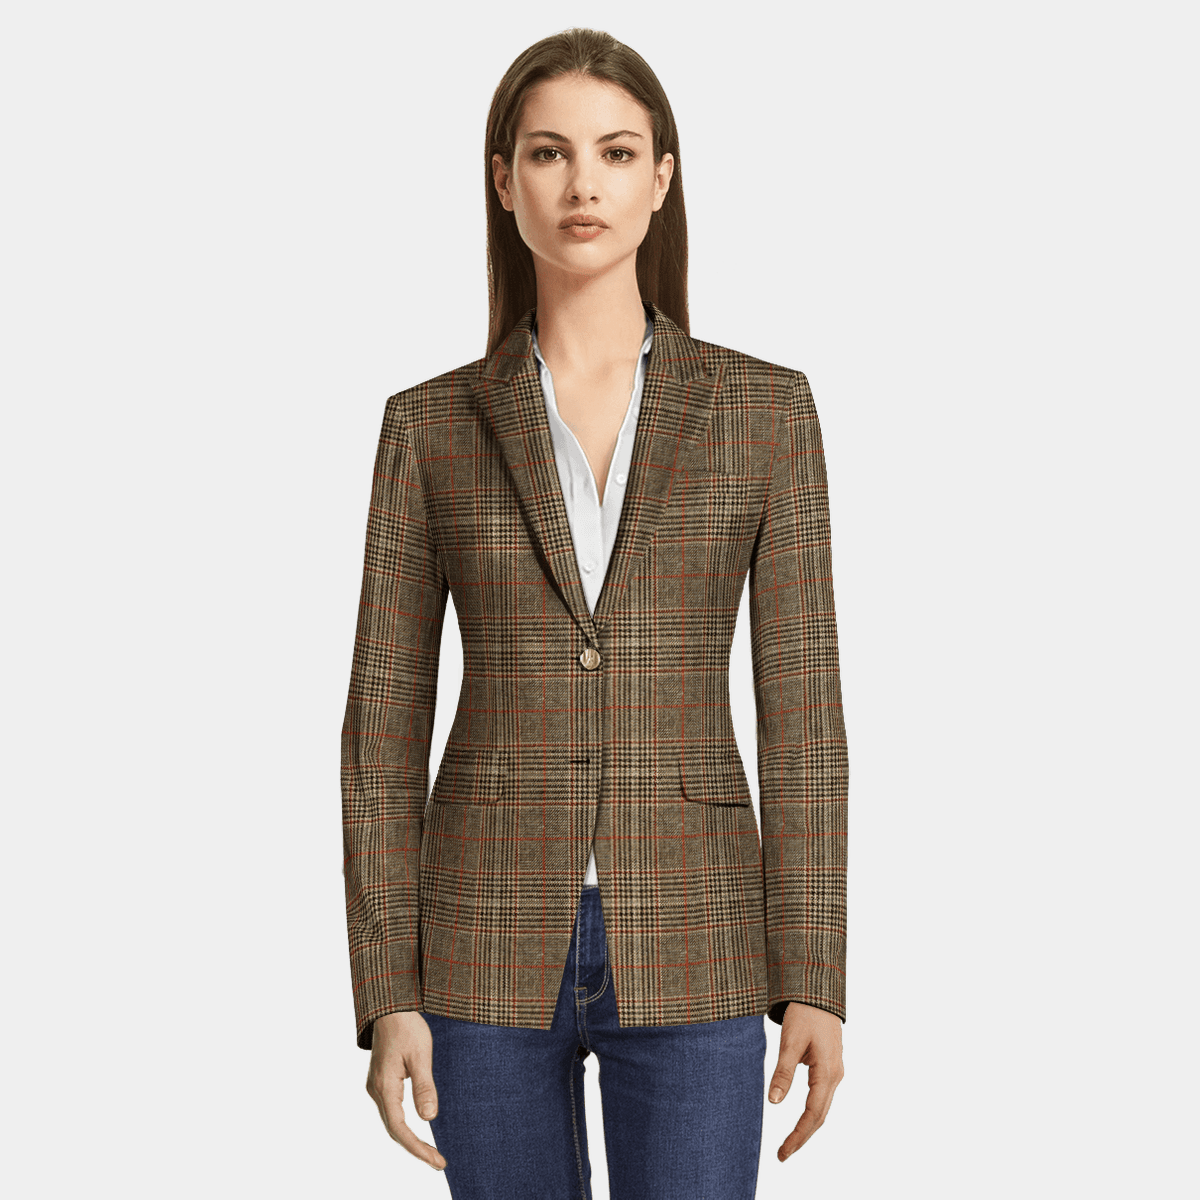 Women's Tweed Jackets  Tweed Blazers - Sumissura